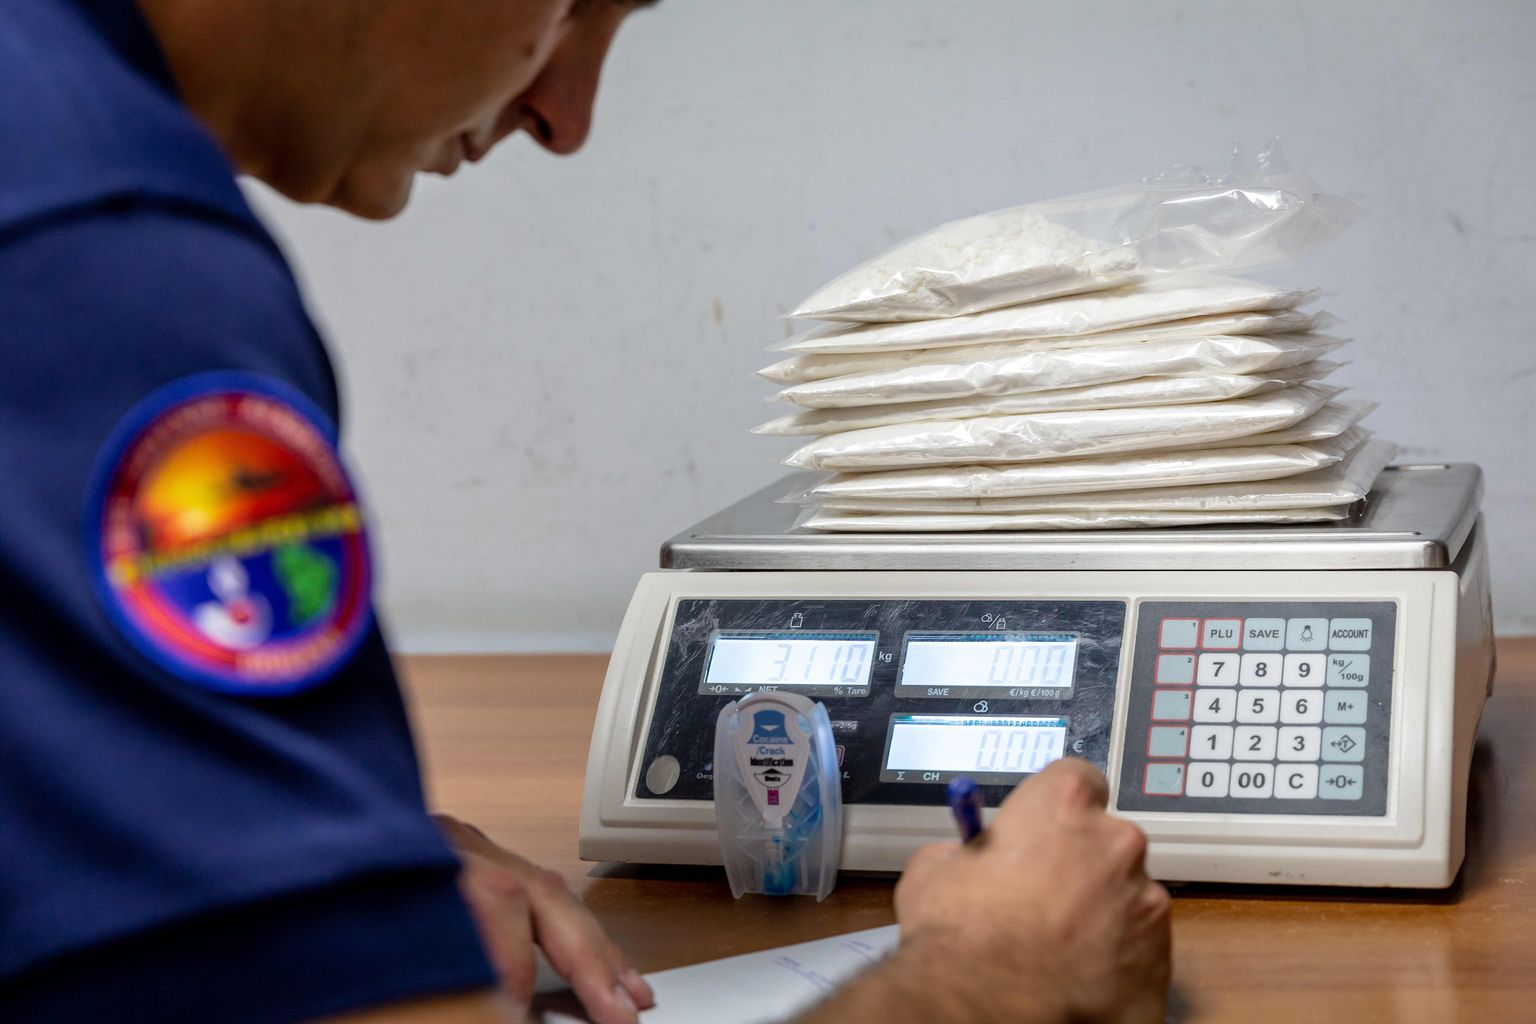 Prantsuse Guajaana korrakaitseametnik kokaiinipakke kaalumas.